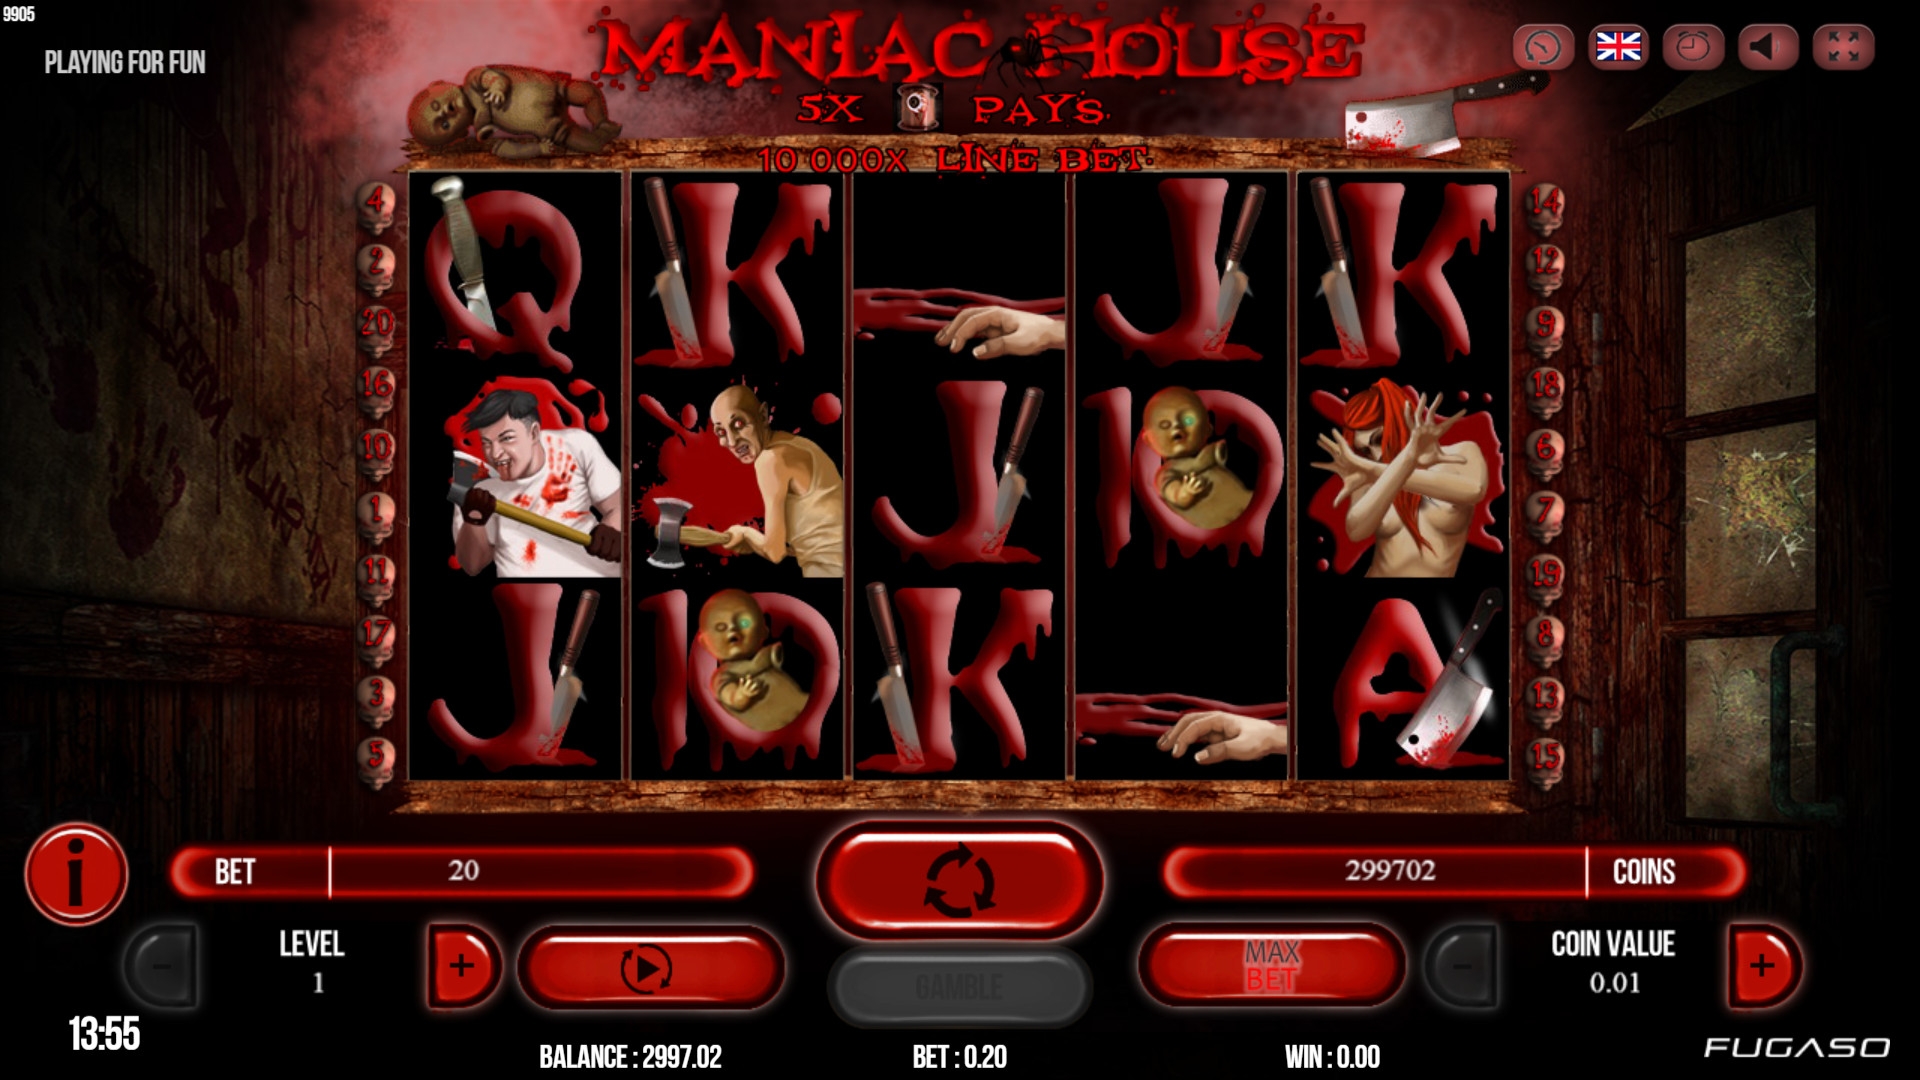 Maniac House (Maniac House) from category Slots